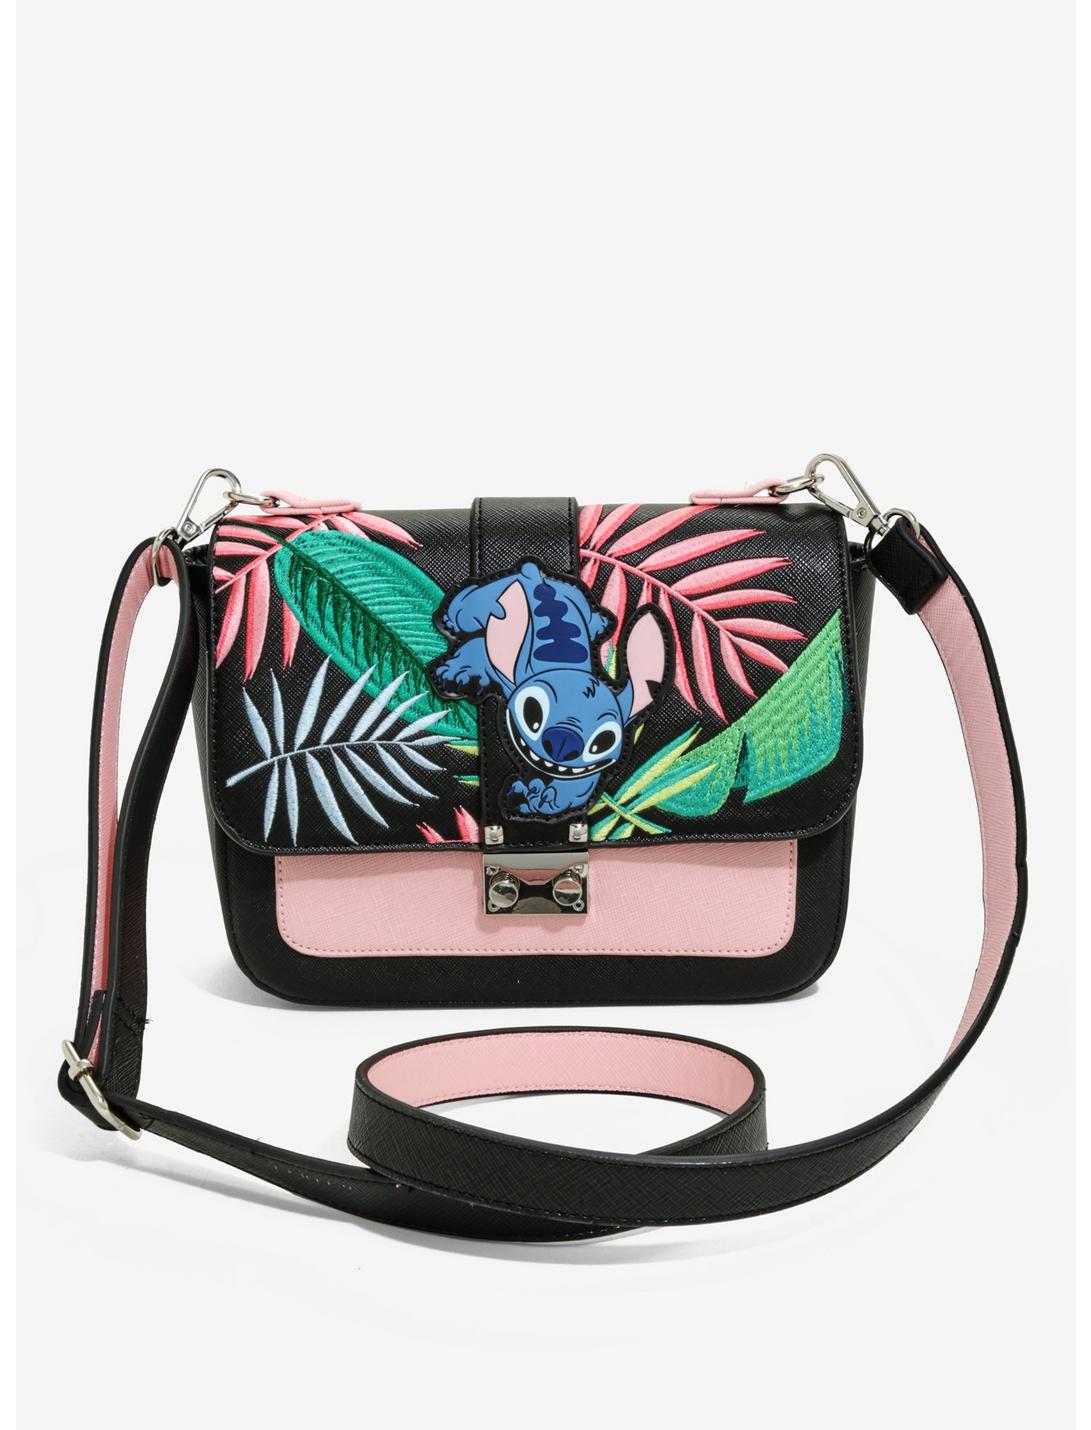 Lilo Stitch Crossbody Bag Shoulder Bag Plush Toy Messenger Wallet Handbag Gift